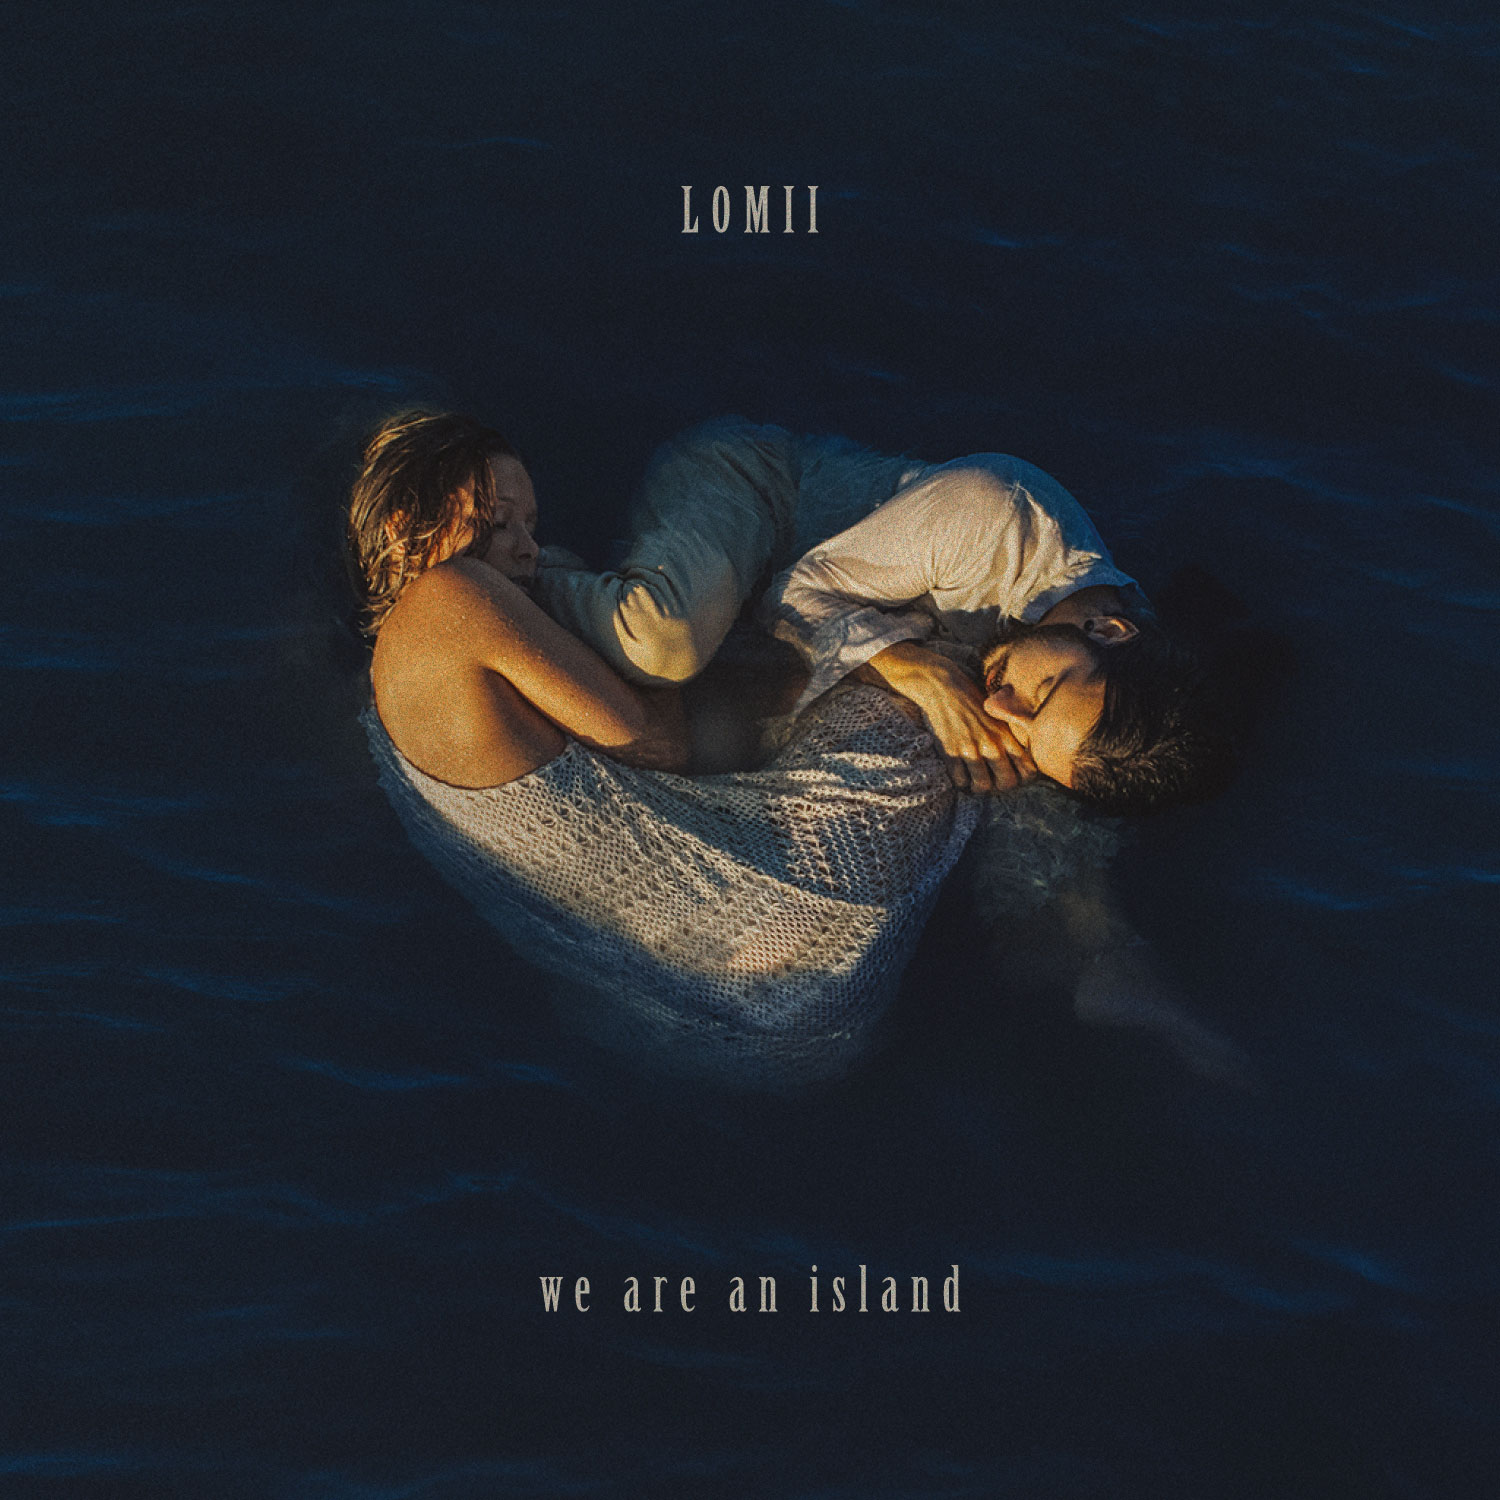 Esce “We are an island” l’album d’esordio dei Lomii